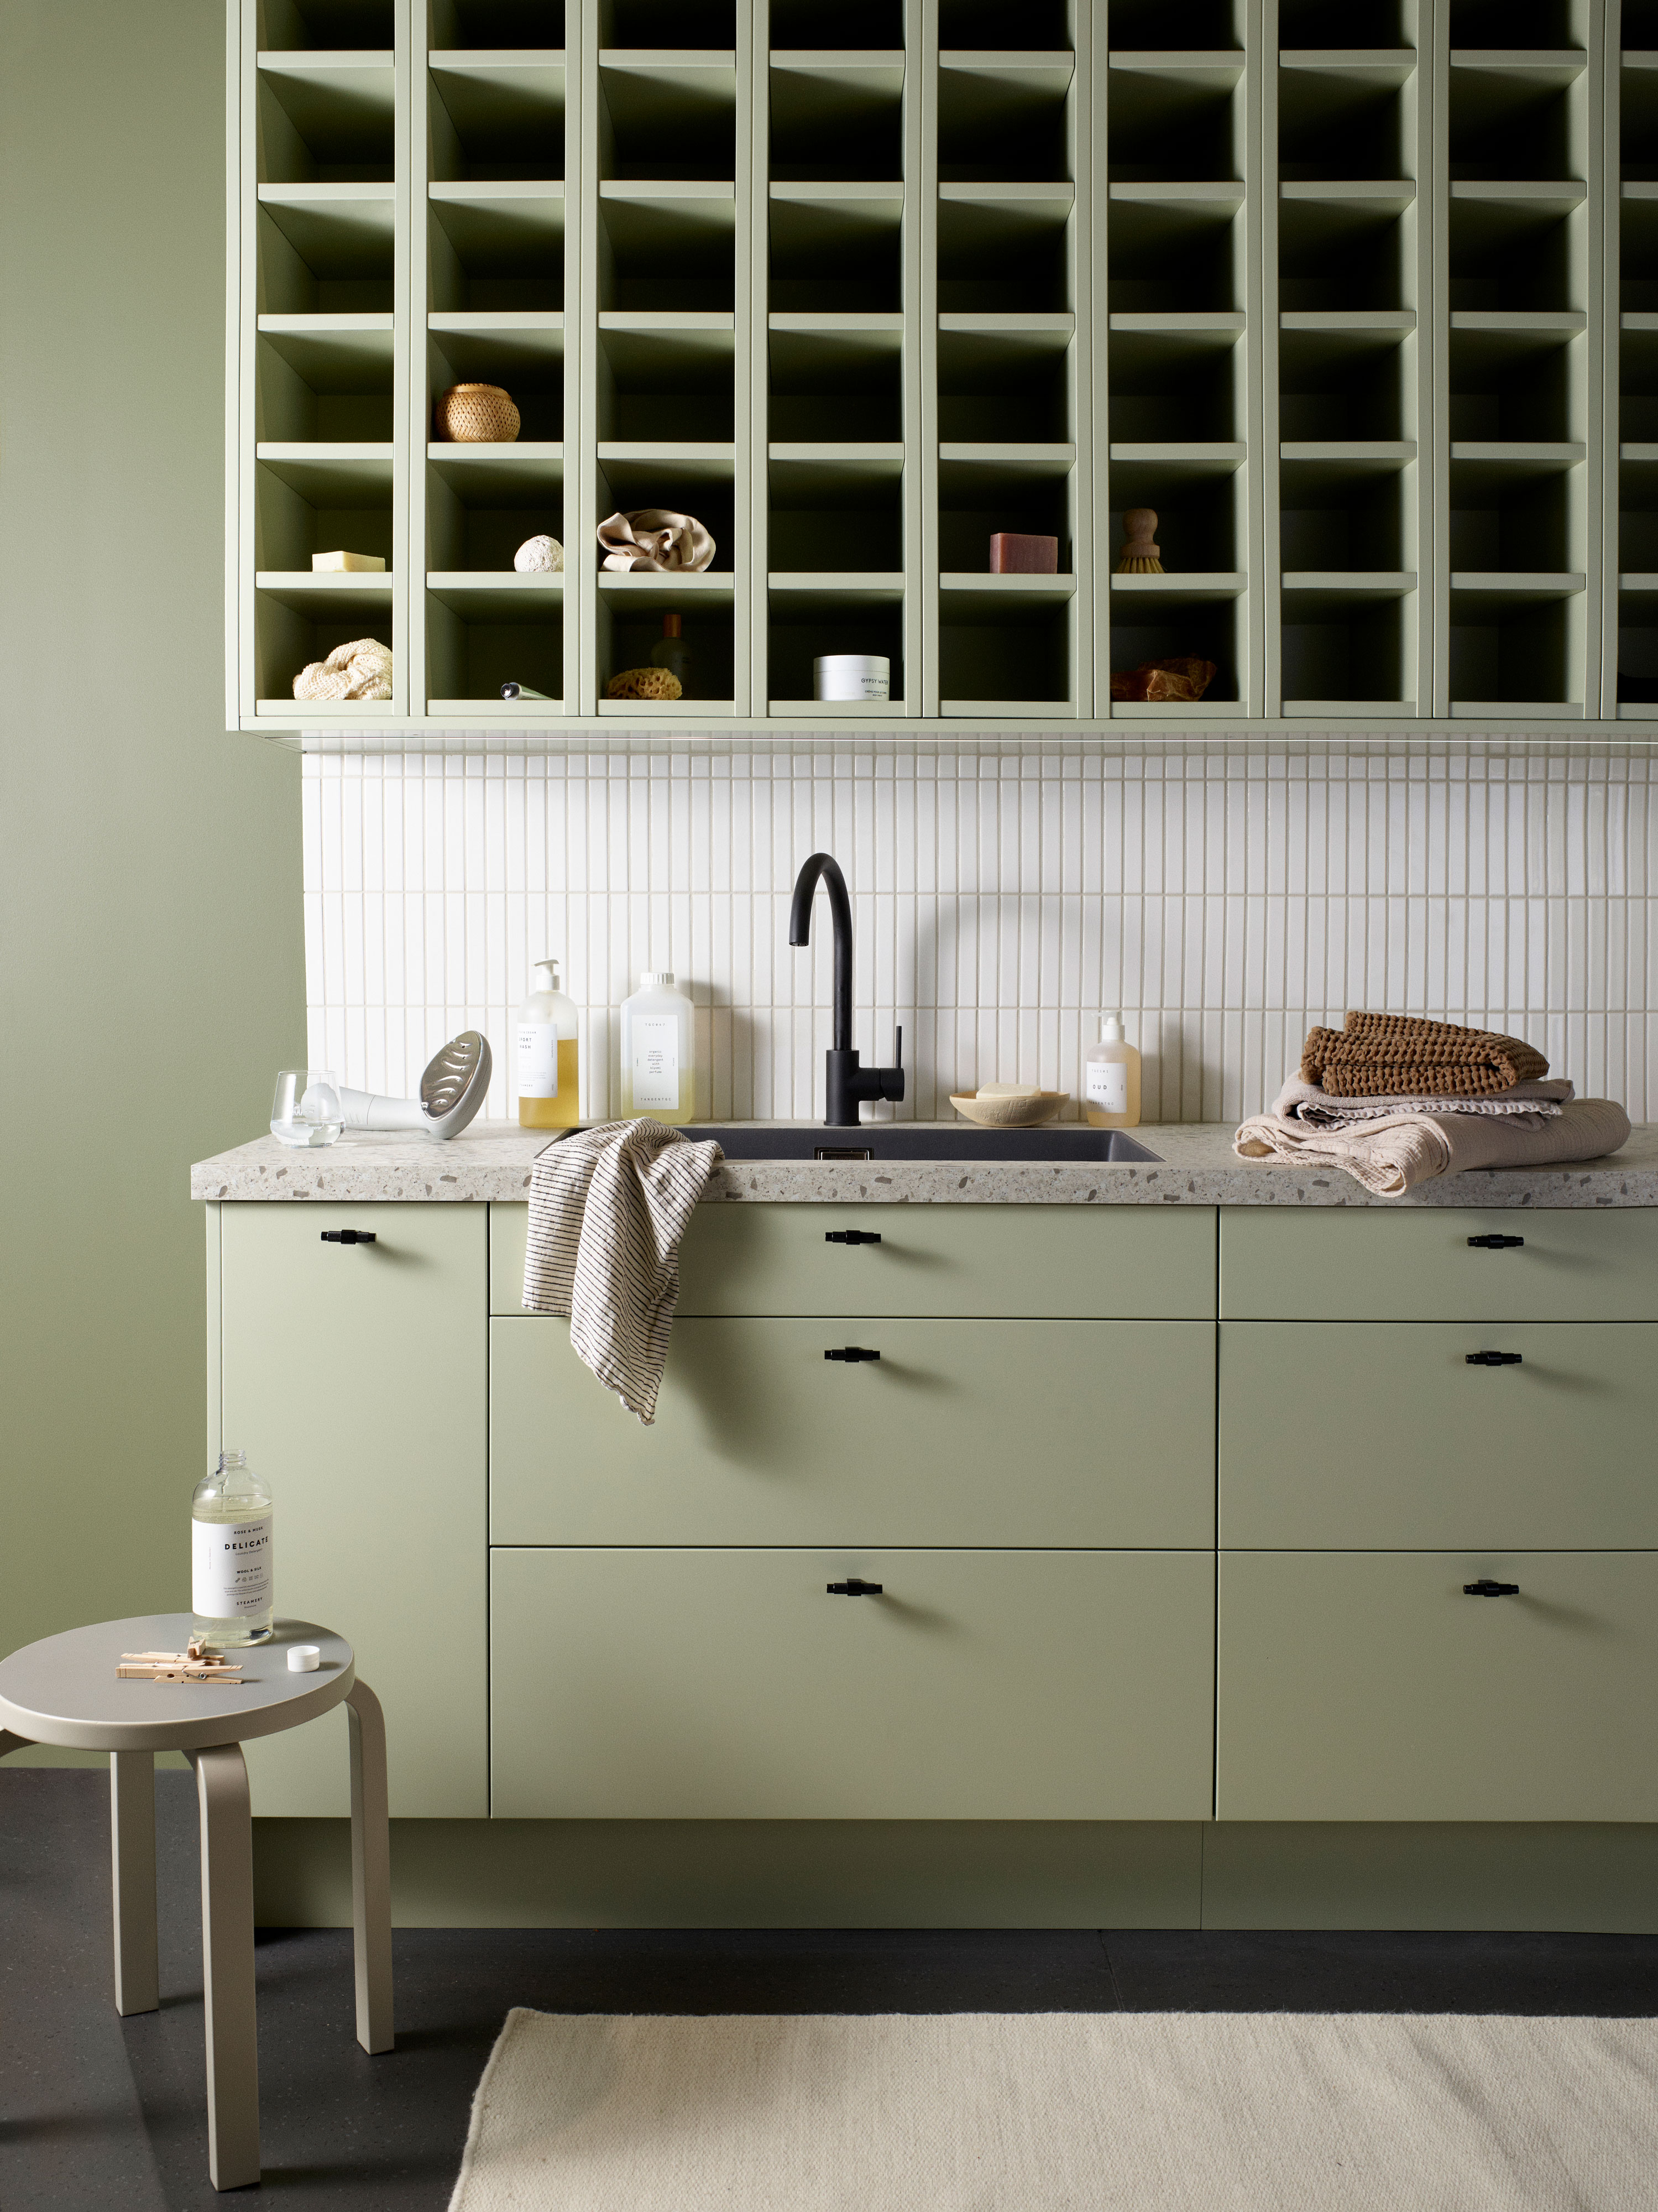 EPOQ - Perfect kitchen - Green Epoq Trend Pistachio Kitchen with shelves